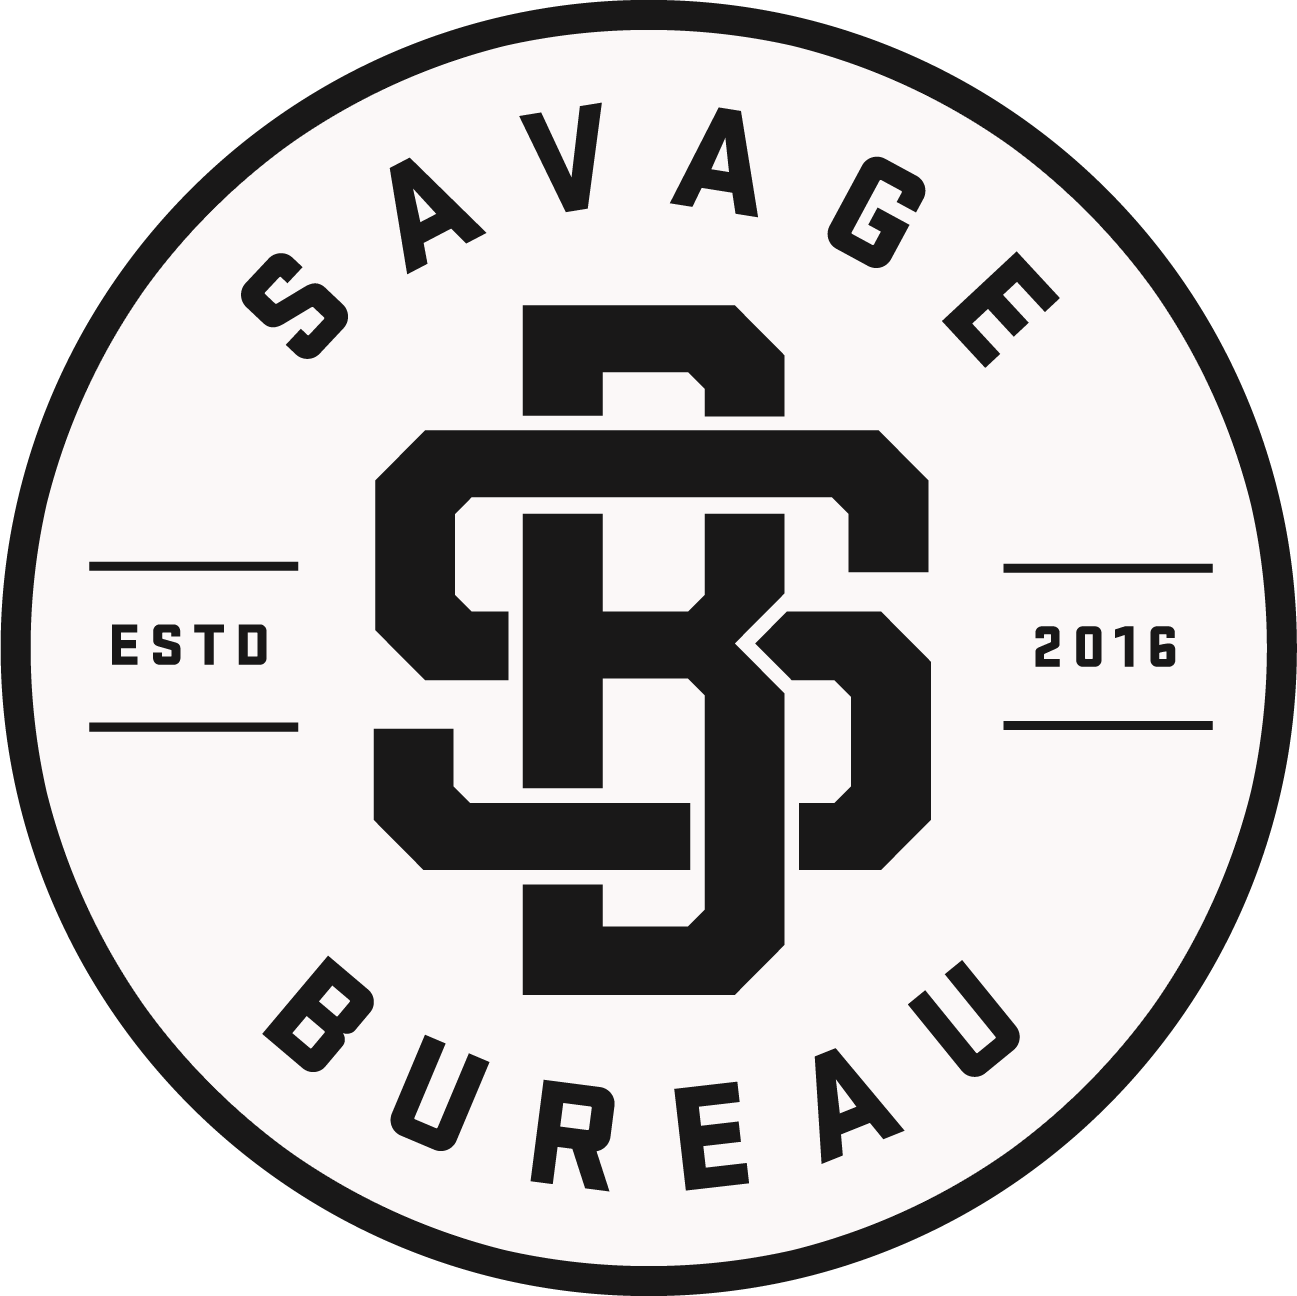 The Savage Bureau profile on Qualified.One